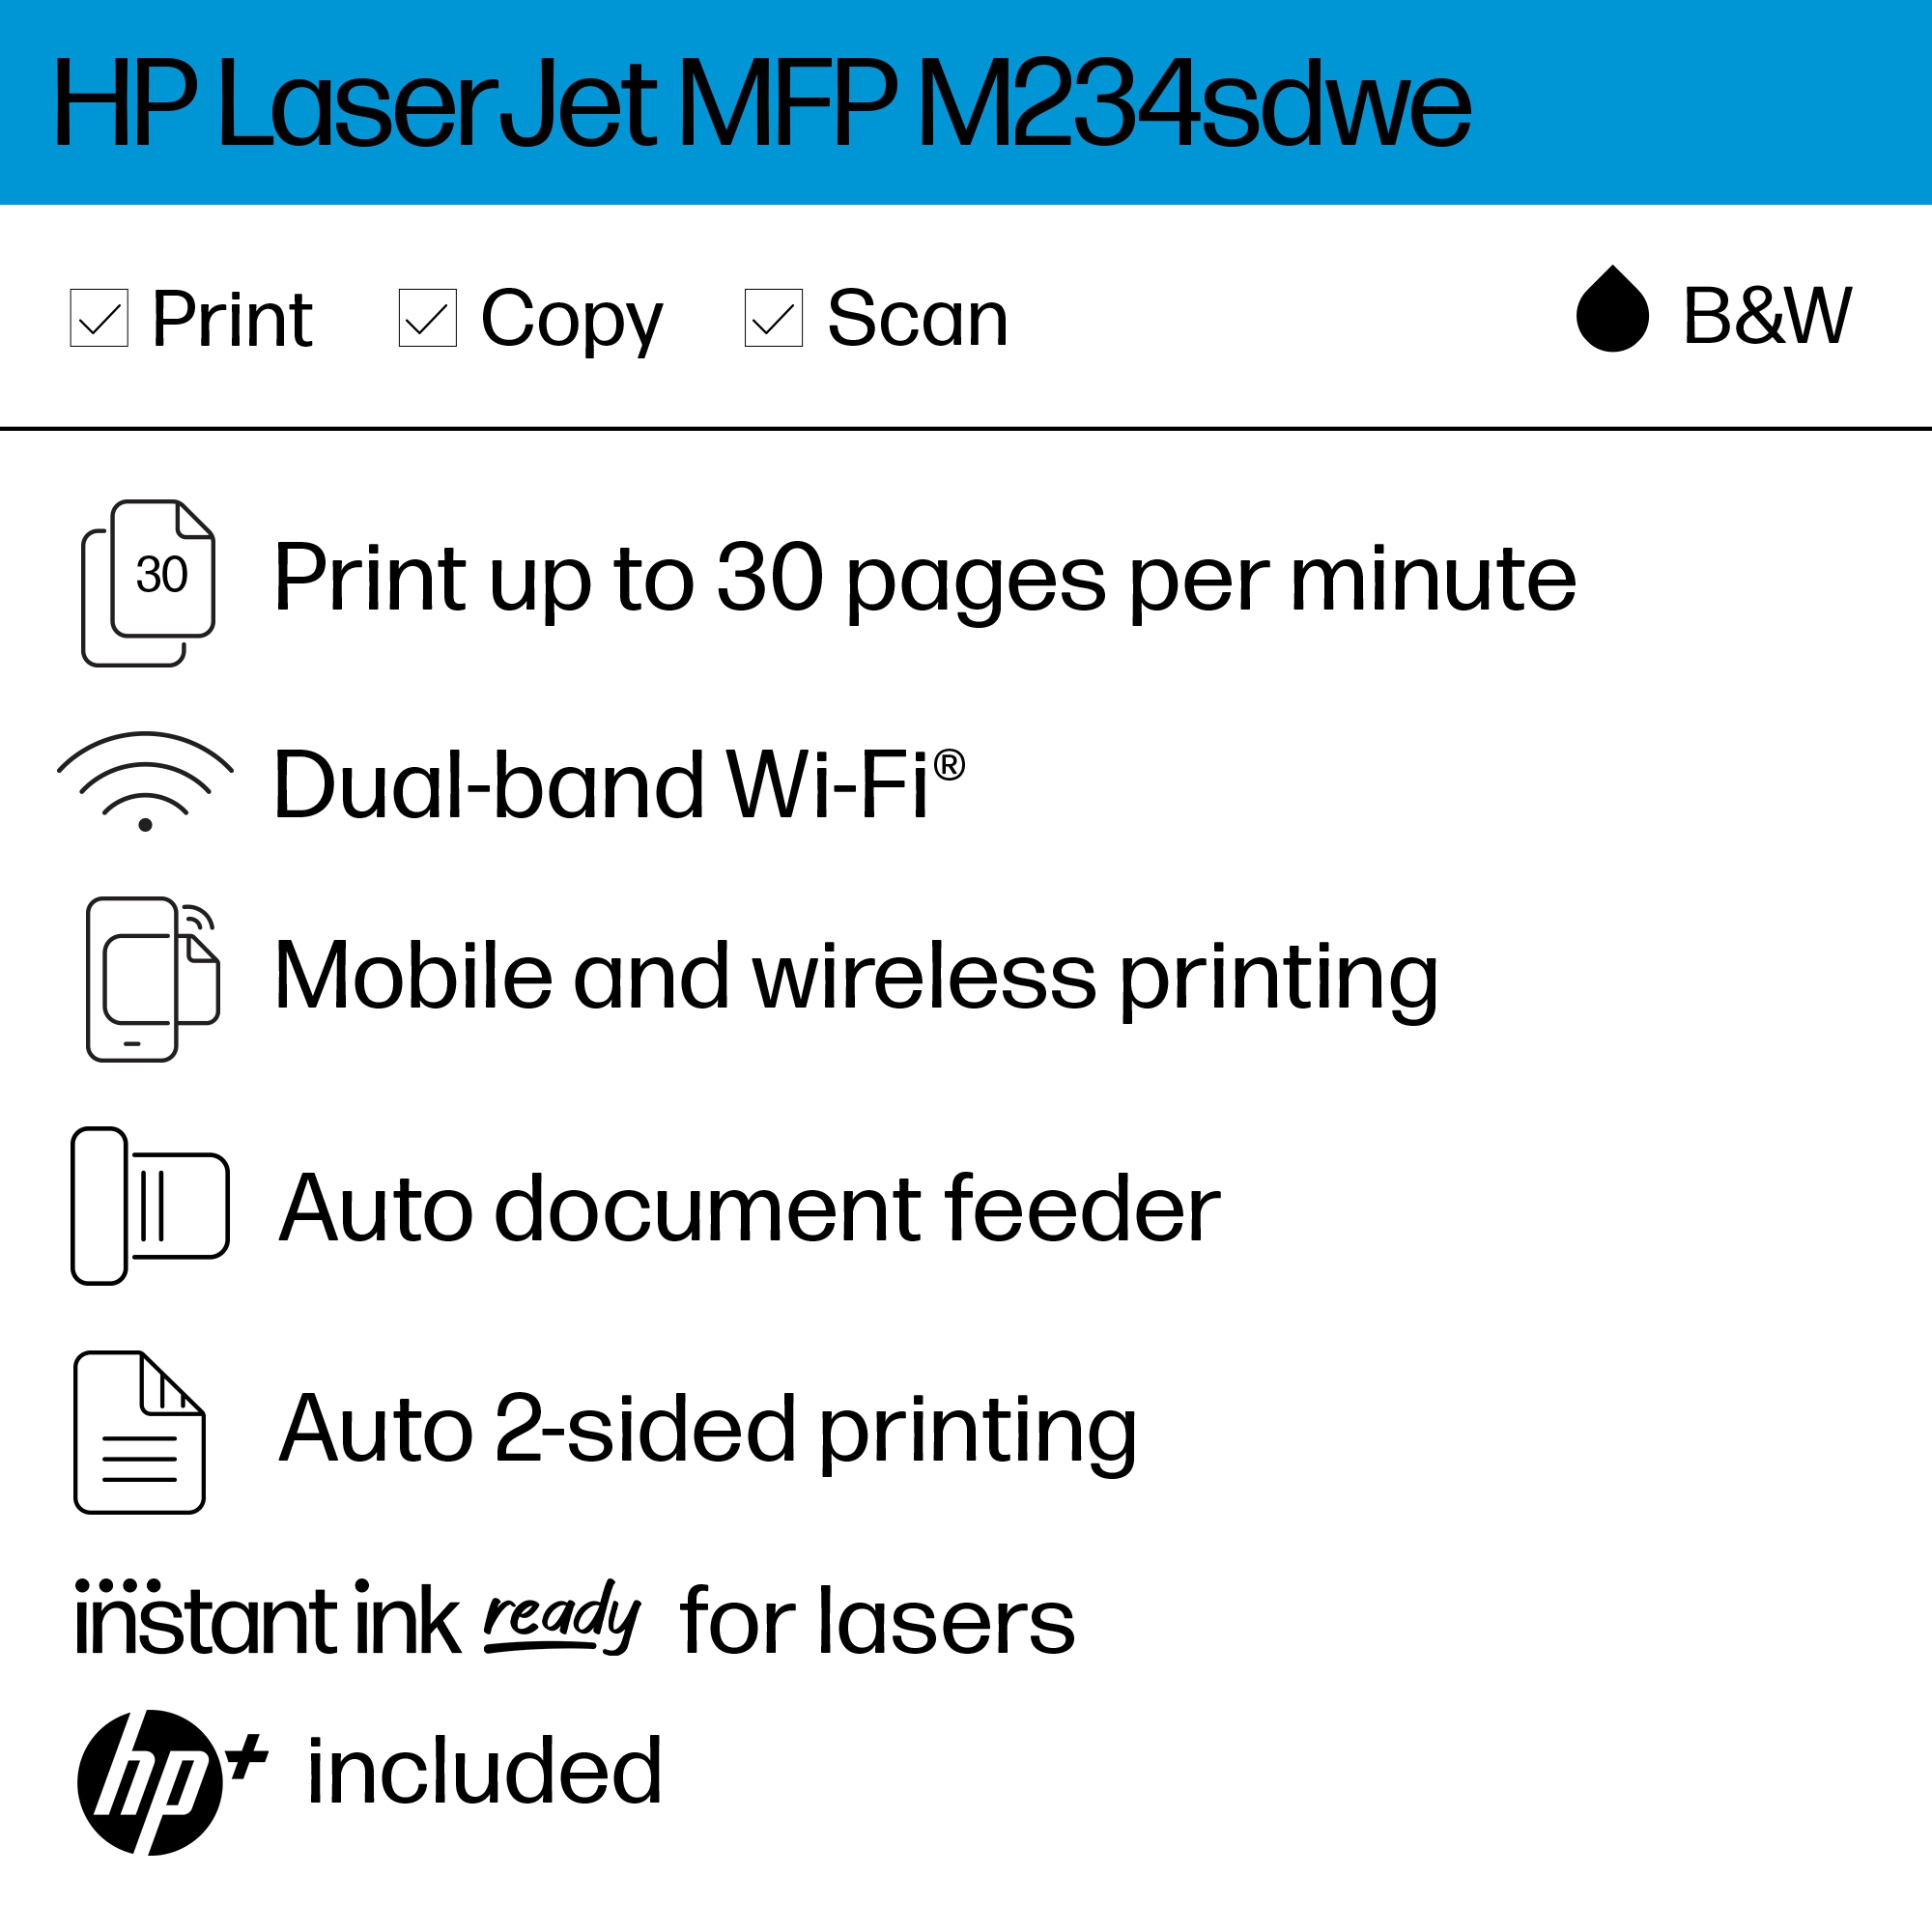 HP LaserJet MFP M234sdwe Printer Ink Instant toner HP+ bonus months w/ through 6